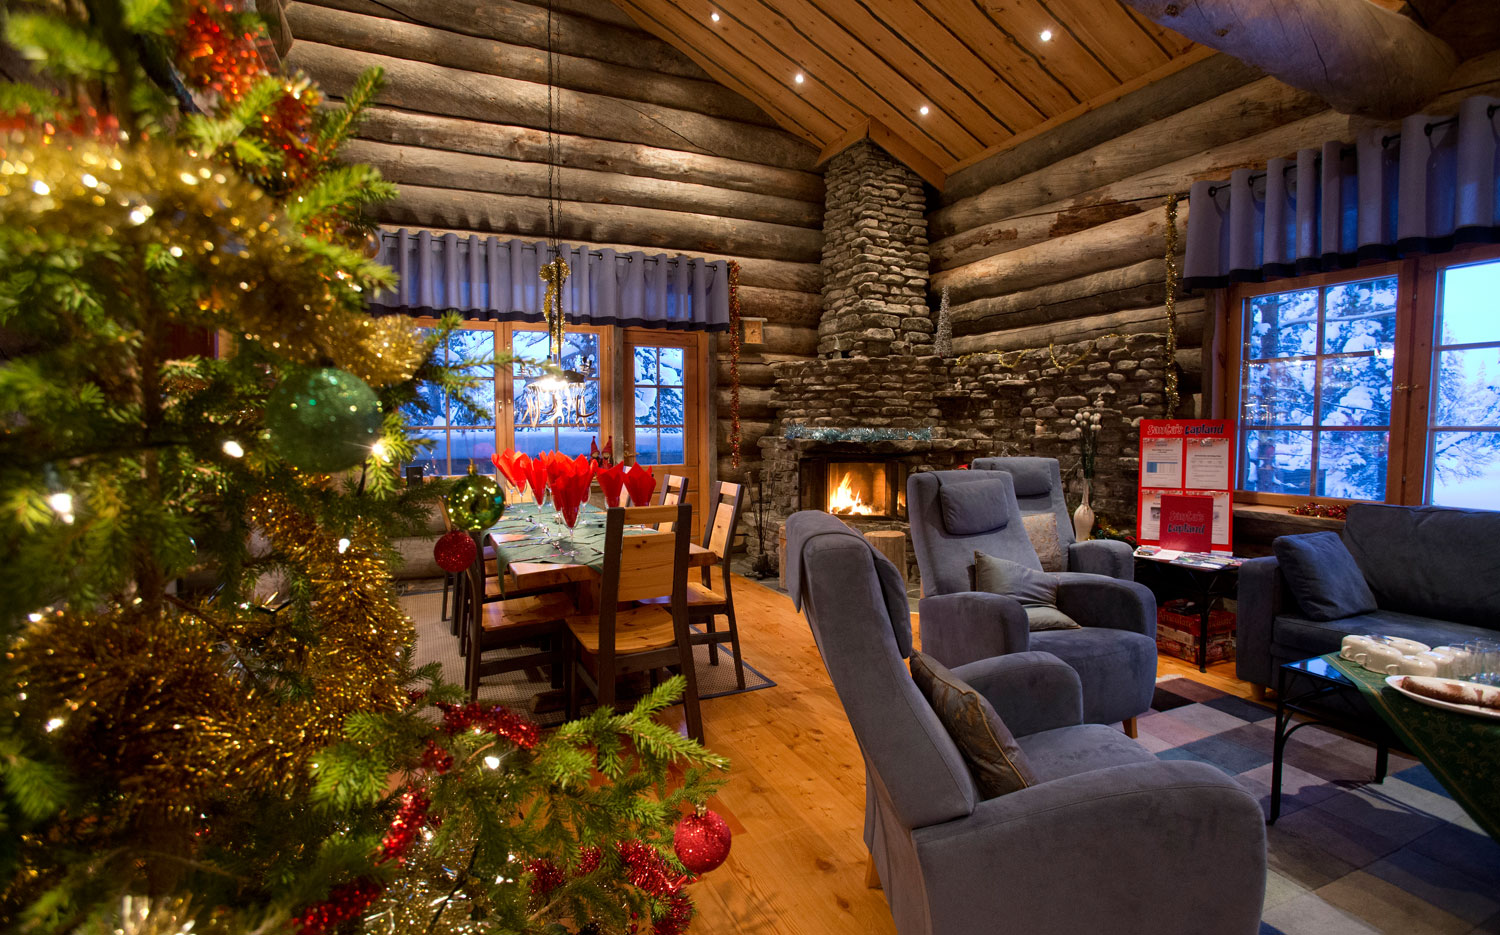 Santa's Lapland Log Cabin Holidays 4 Bedroom Christmas Cabins 'A'